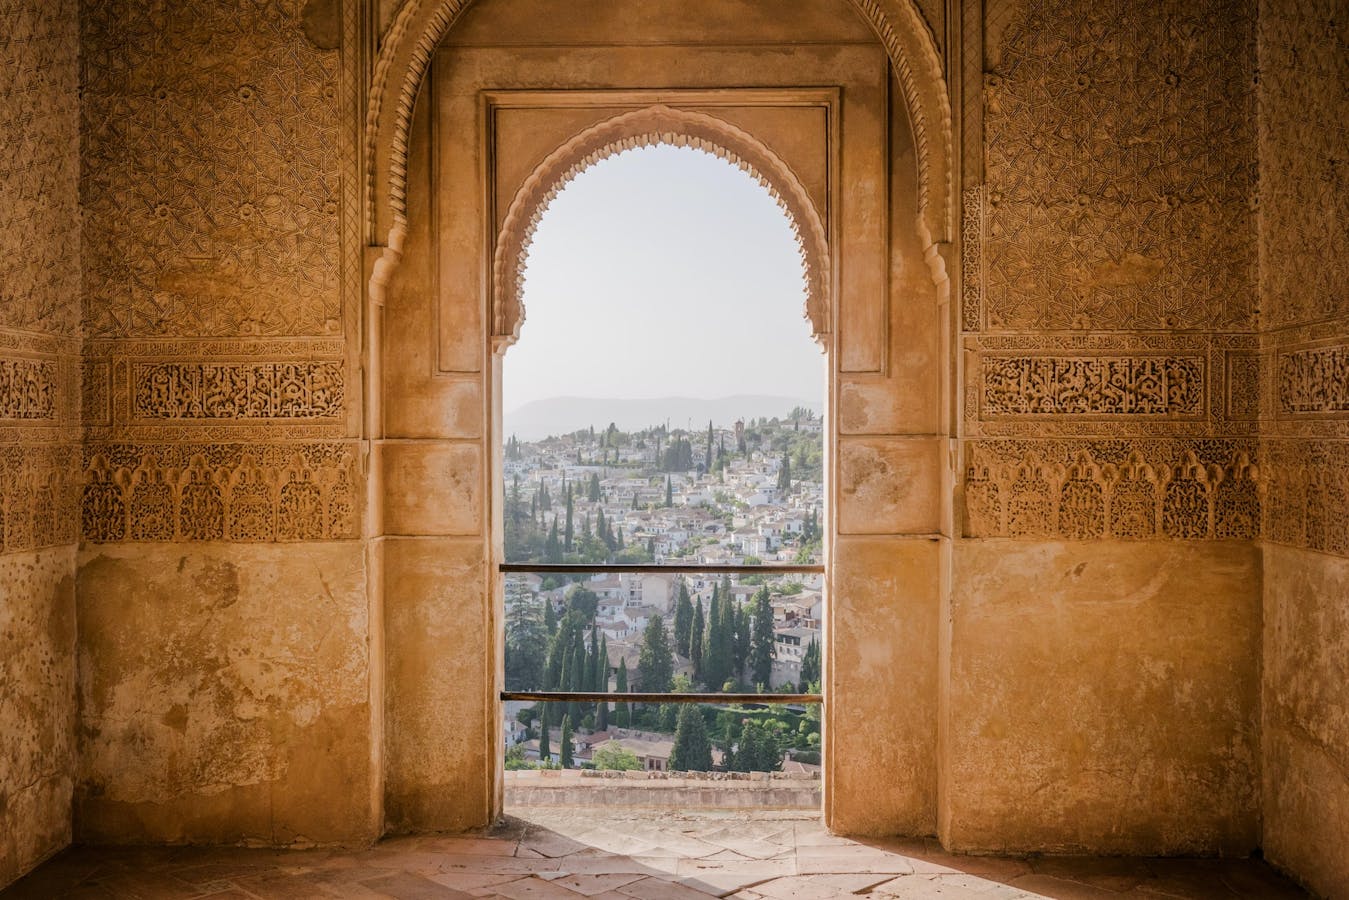 Archway in Alhambra, Granada, Spain